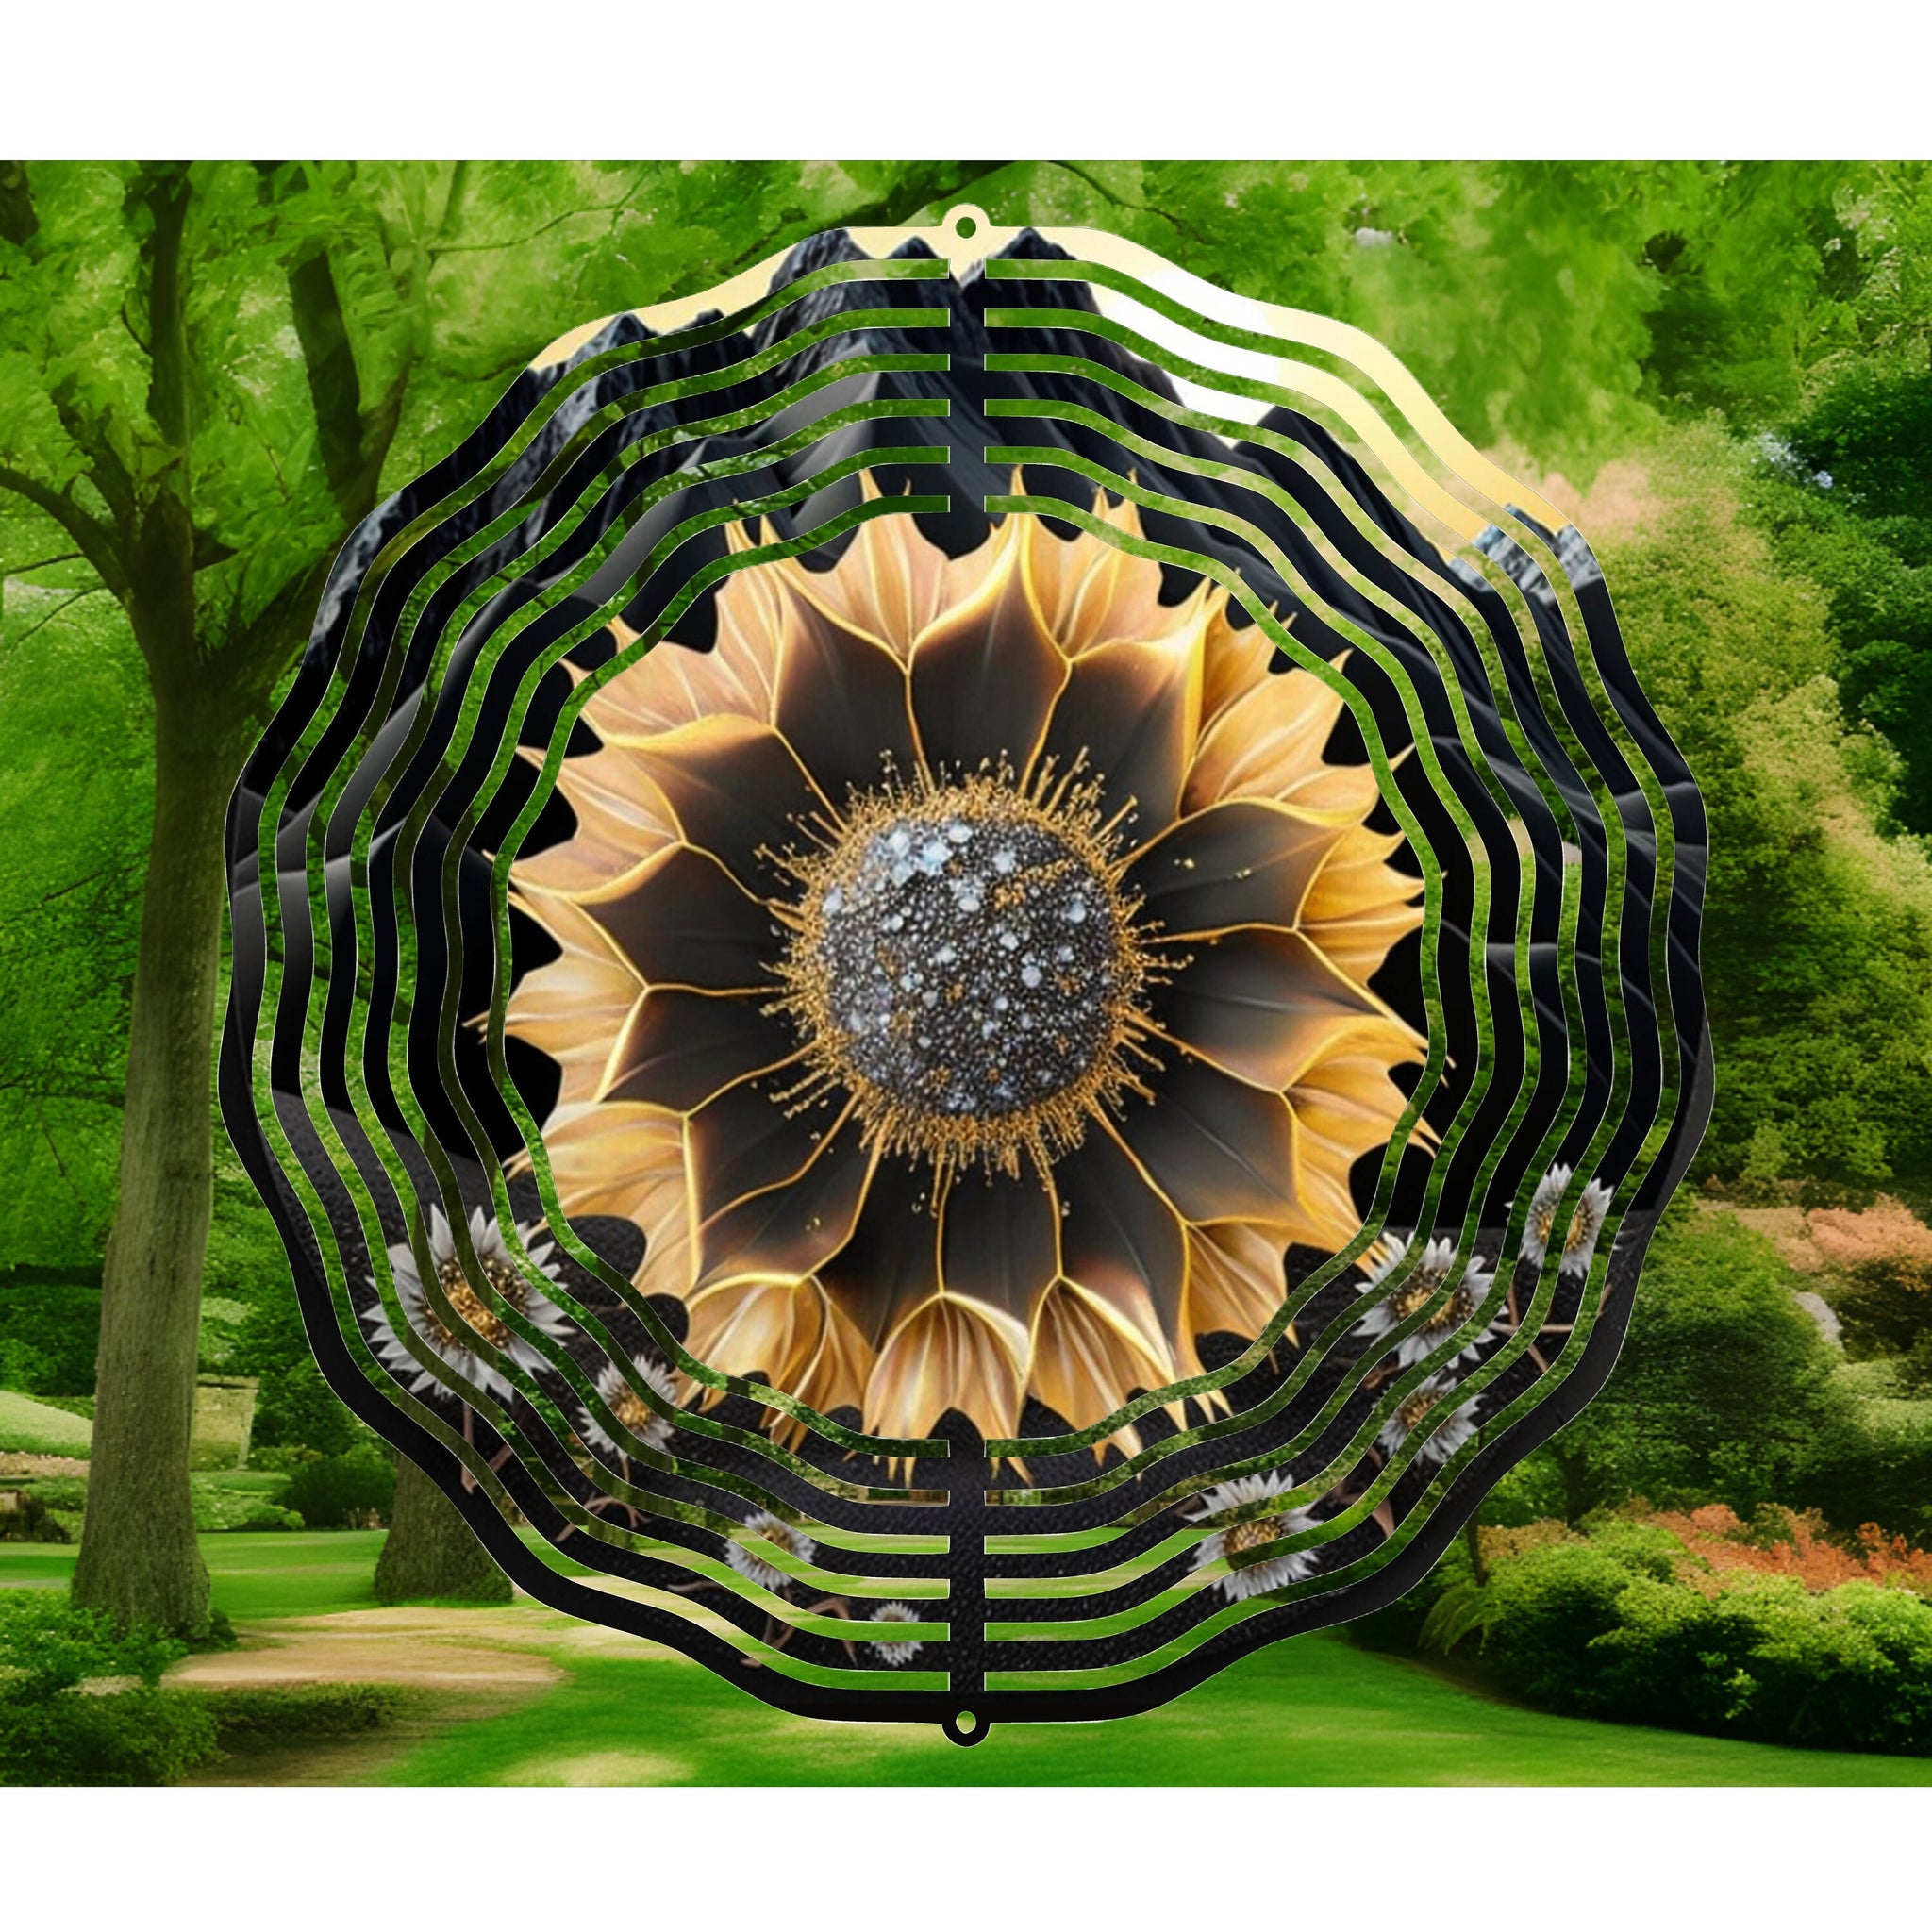 3D Wind Spinner, Gold Sunflower, Floral Wind Spinners, Yard Art, Garden Decorations